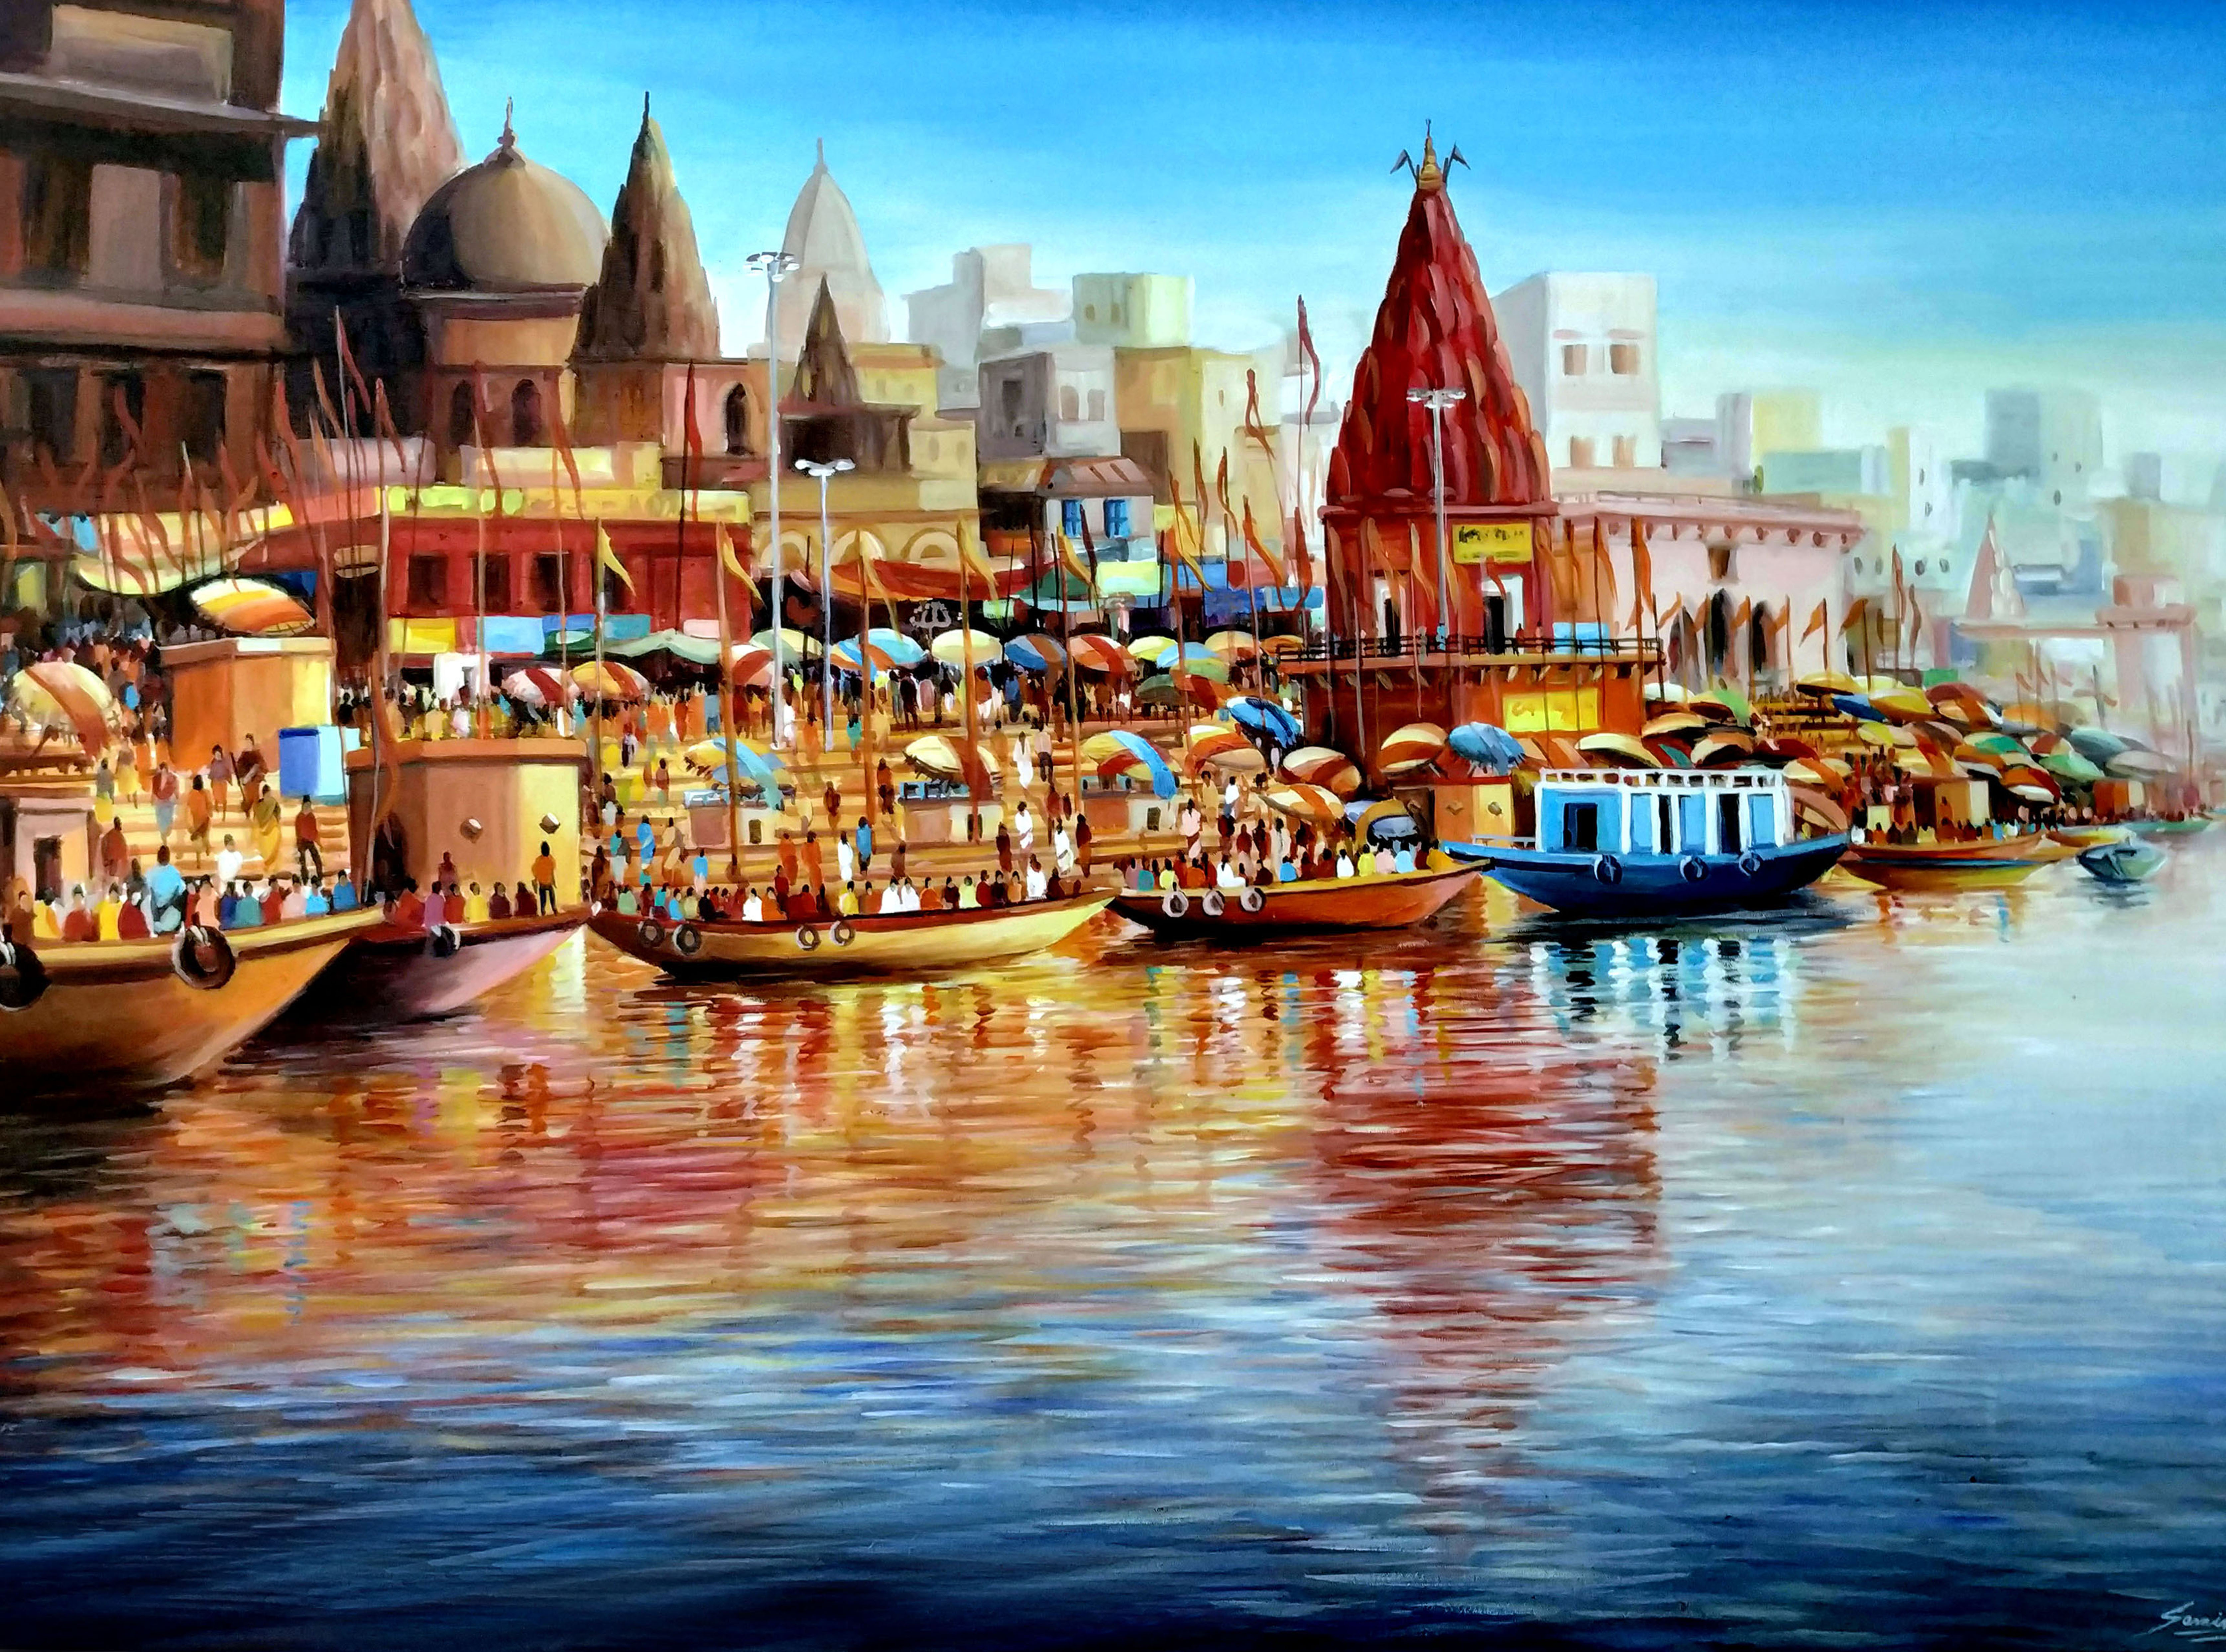 Colorful Morning Varanasi Ghat